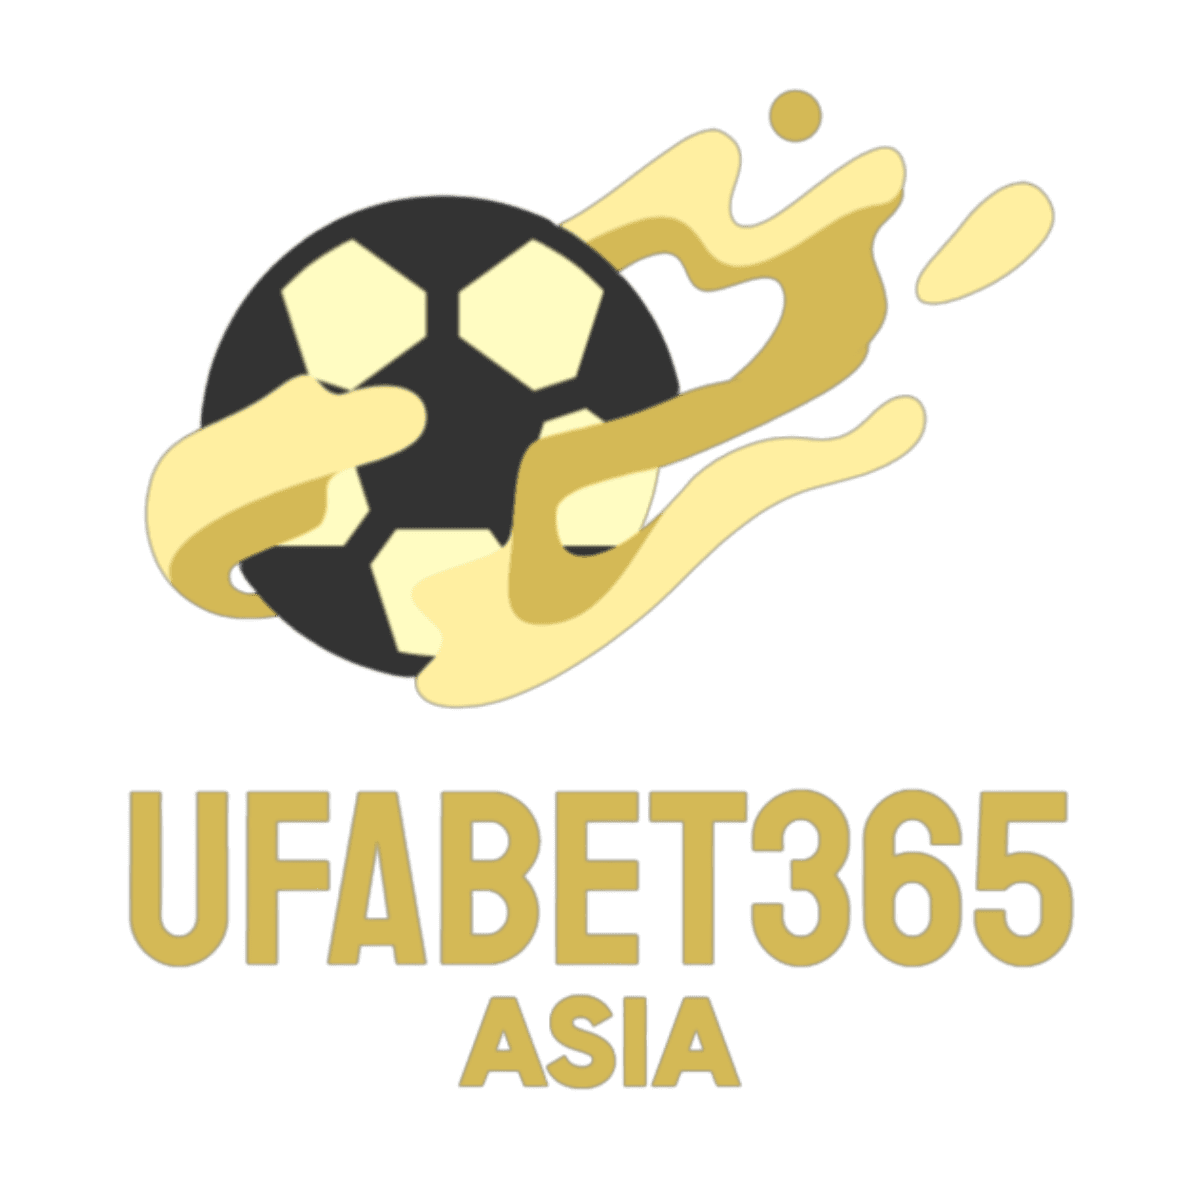 ufabet365 logo trans